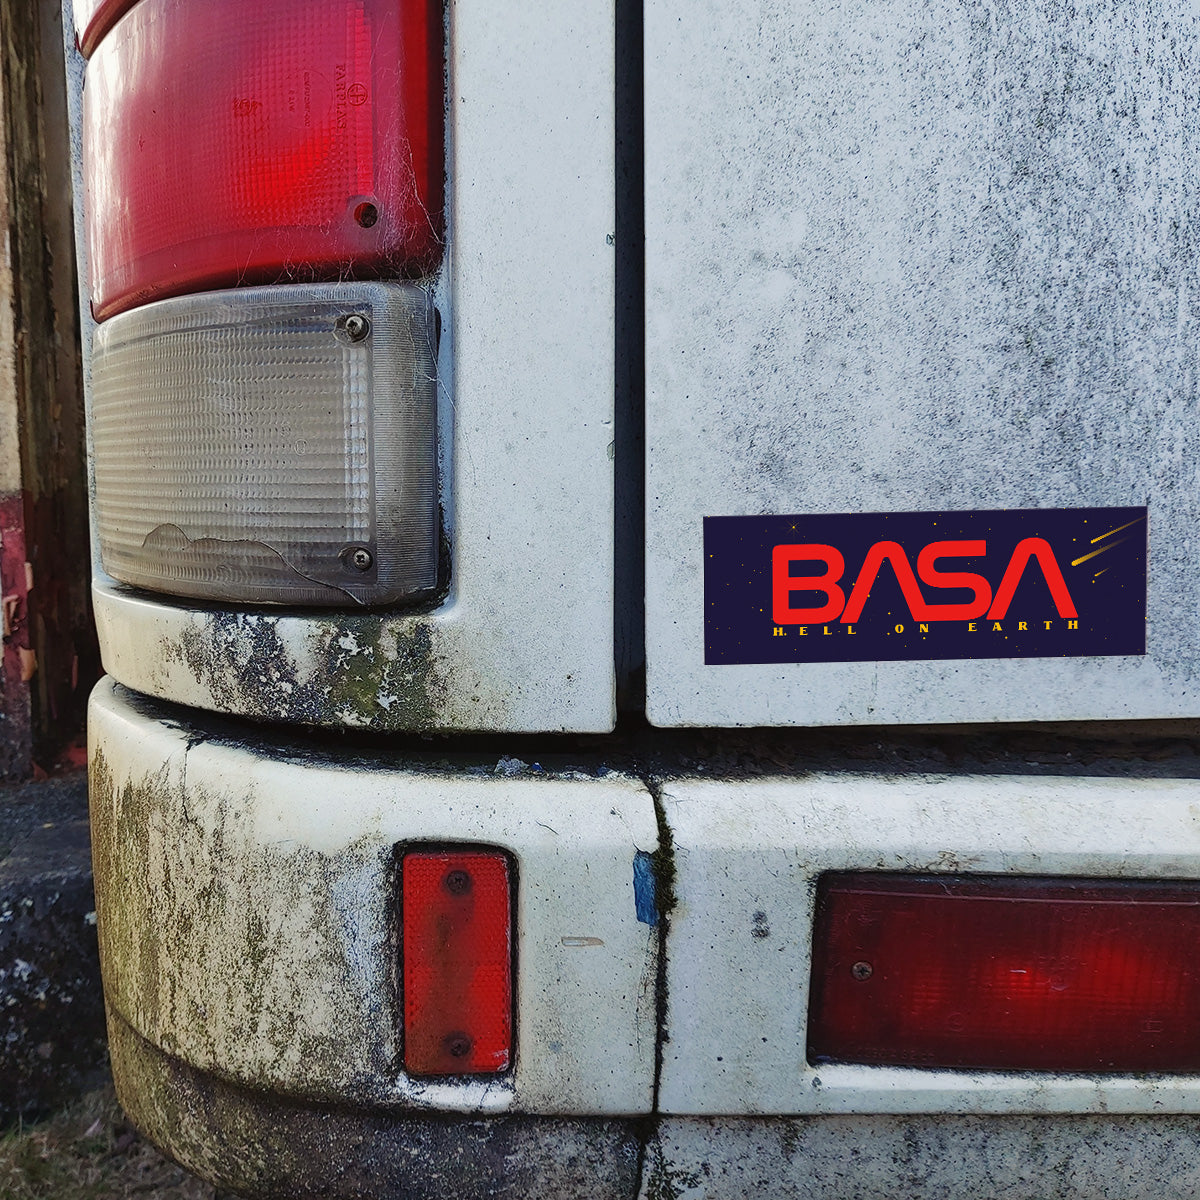 BASA Bumper Sticker